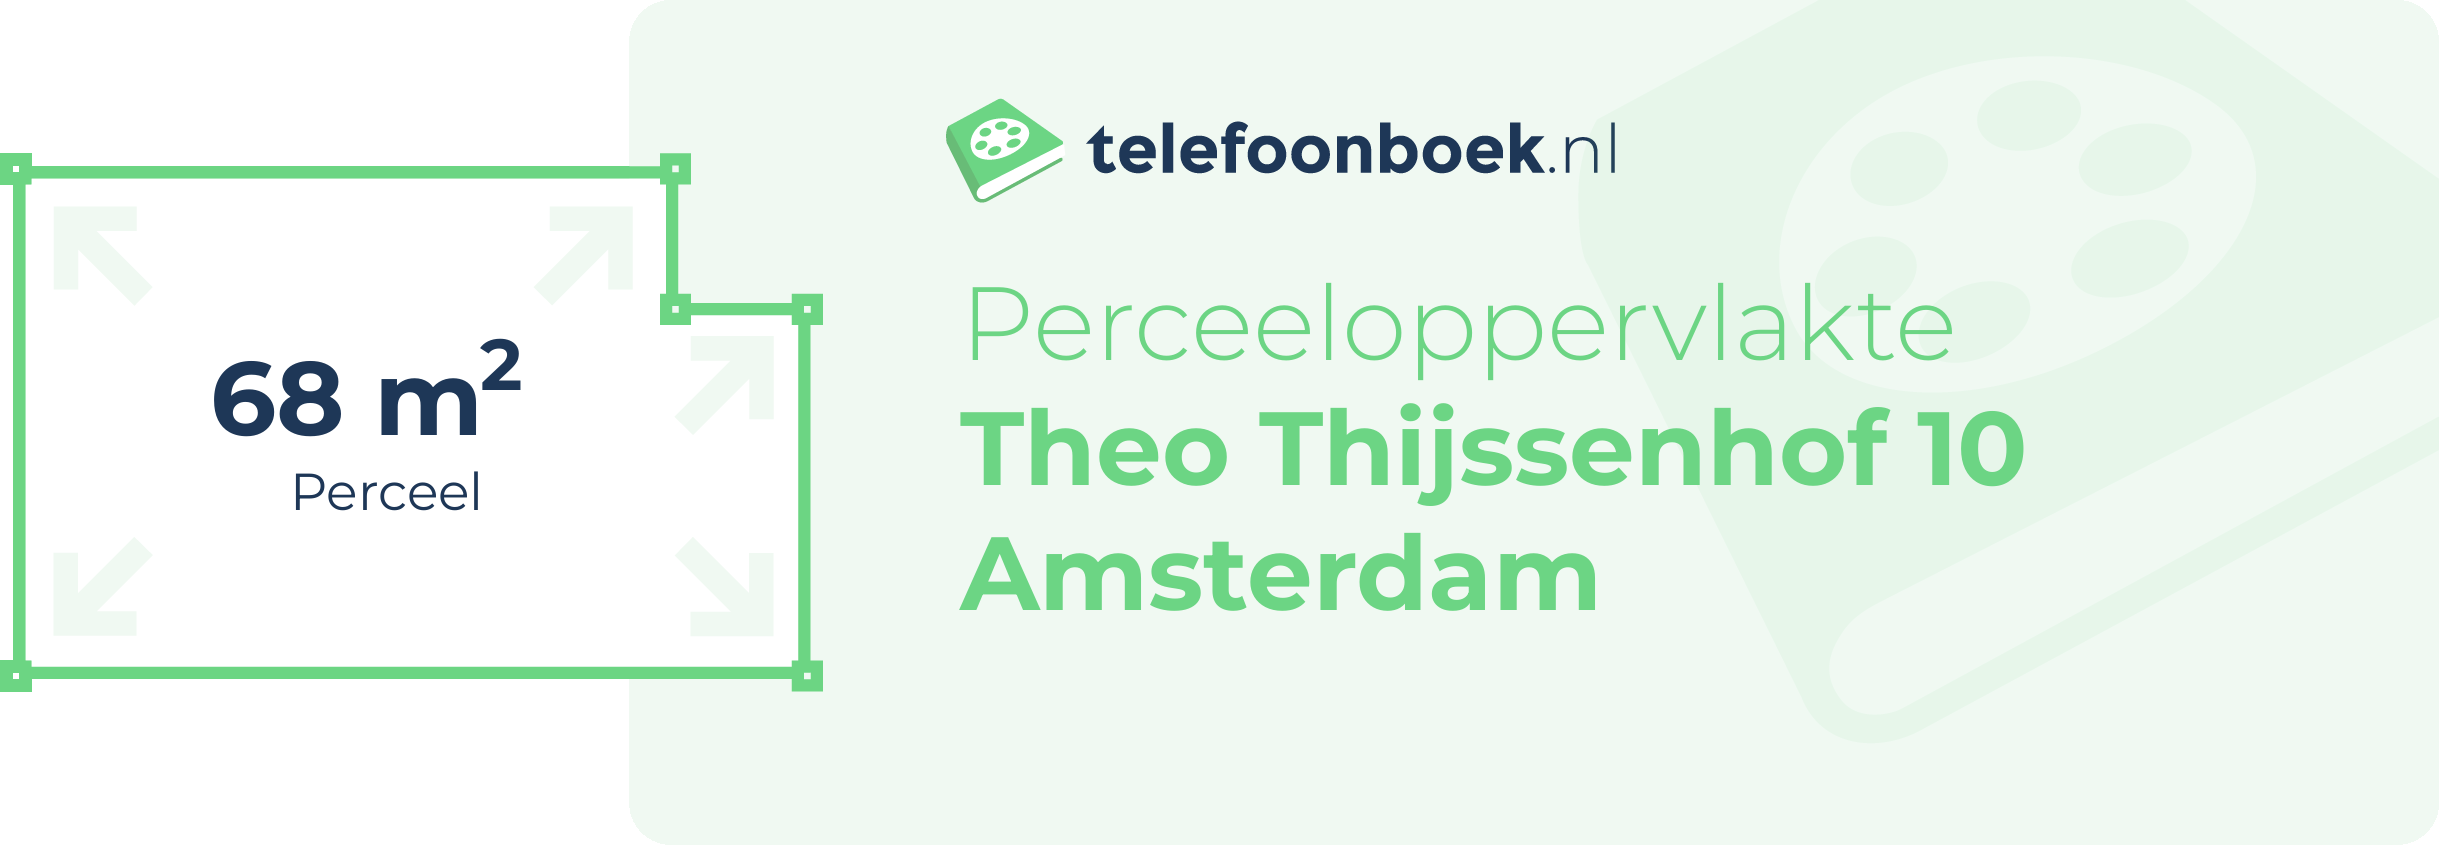 Perceeloppervlakte Theo Thijssenhof 10 Amsterdam